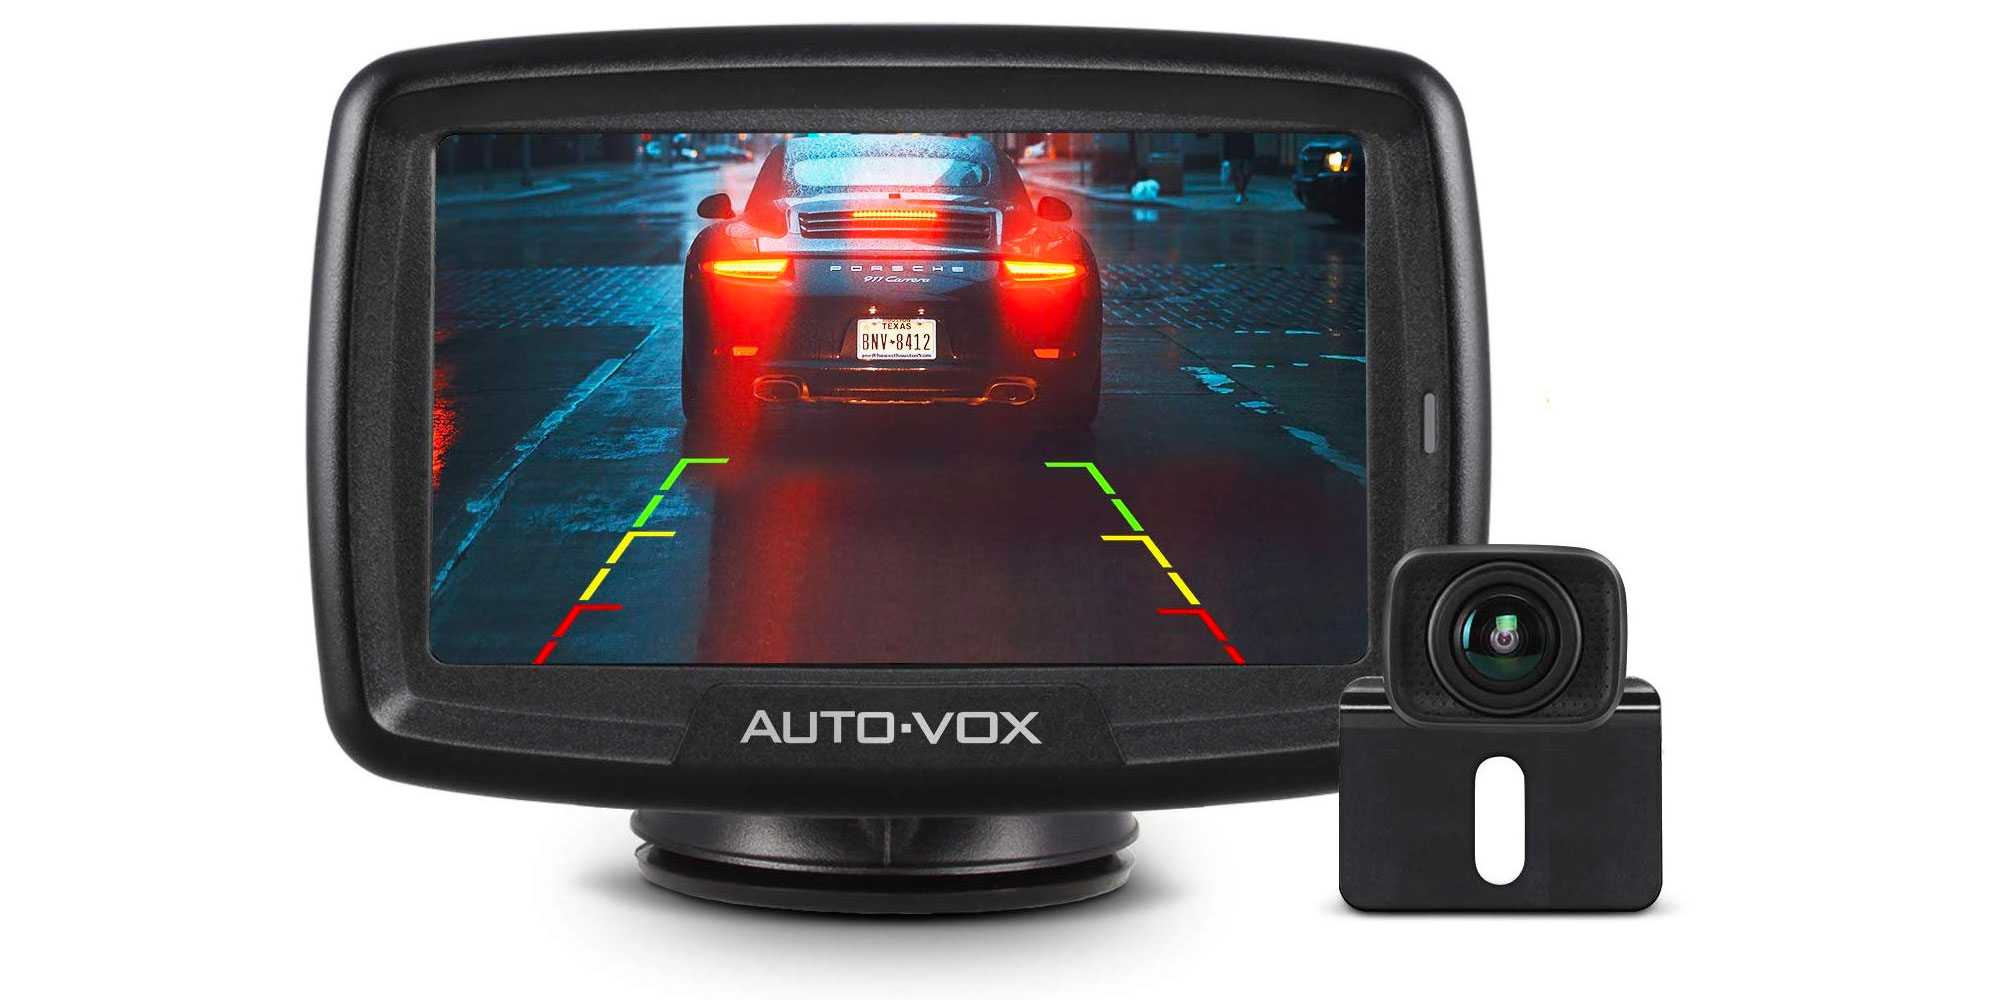  AUTO-VOX Wireless Backup Camera for Car, 3Mins DIY